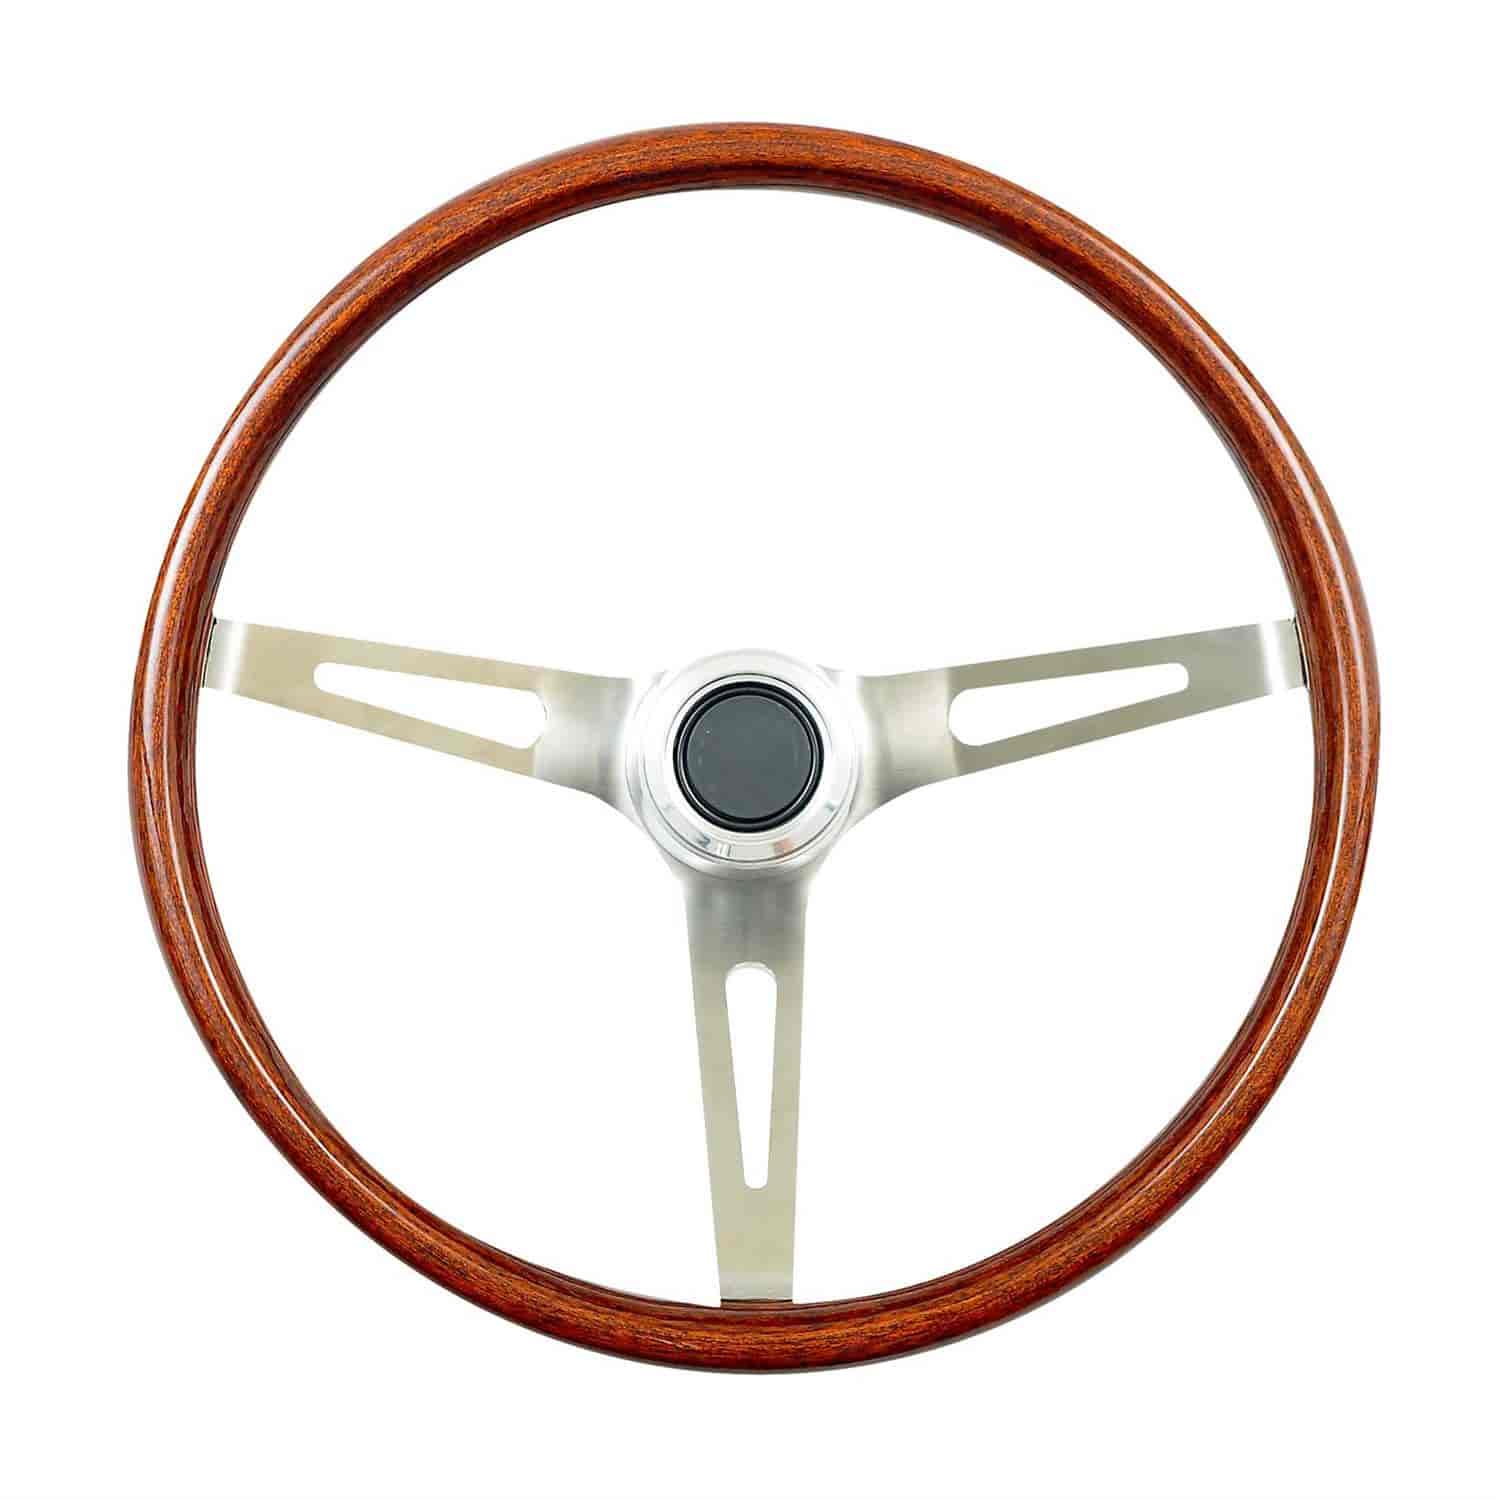 GT Classic Steering Wheel Diameter: 15"